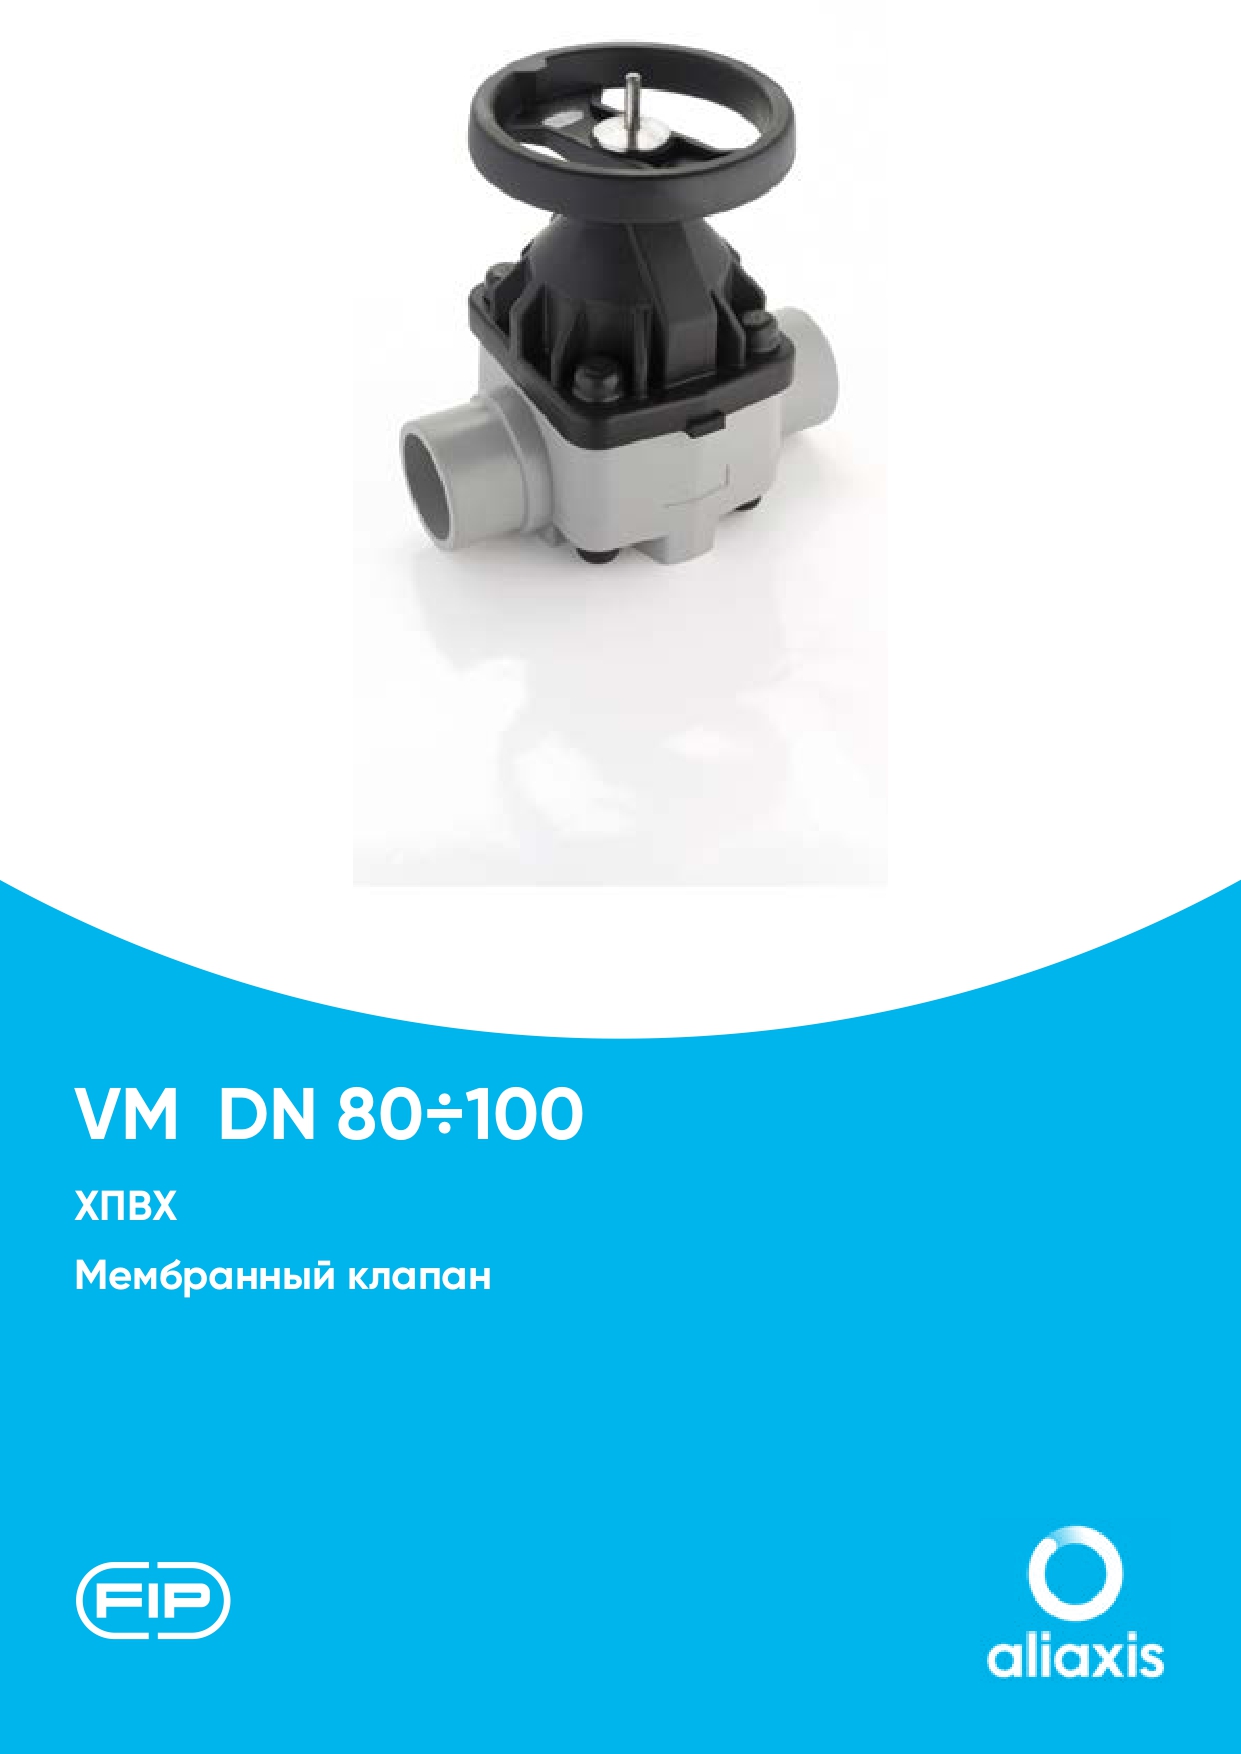 Мембранные клапаны VM DN80-100 из ХПВХ